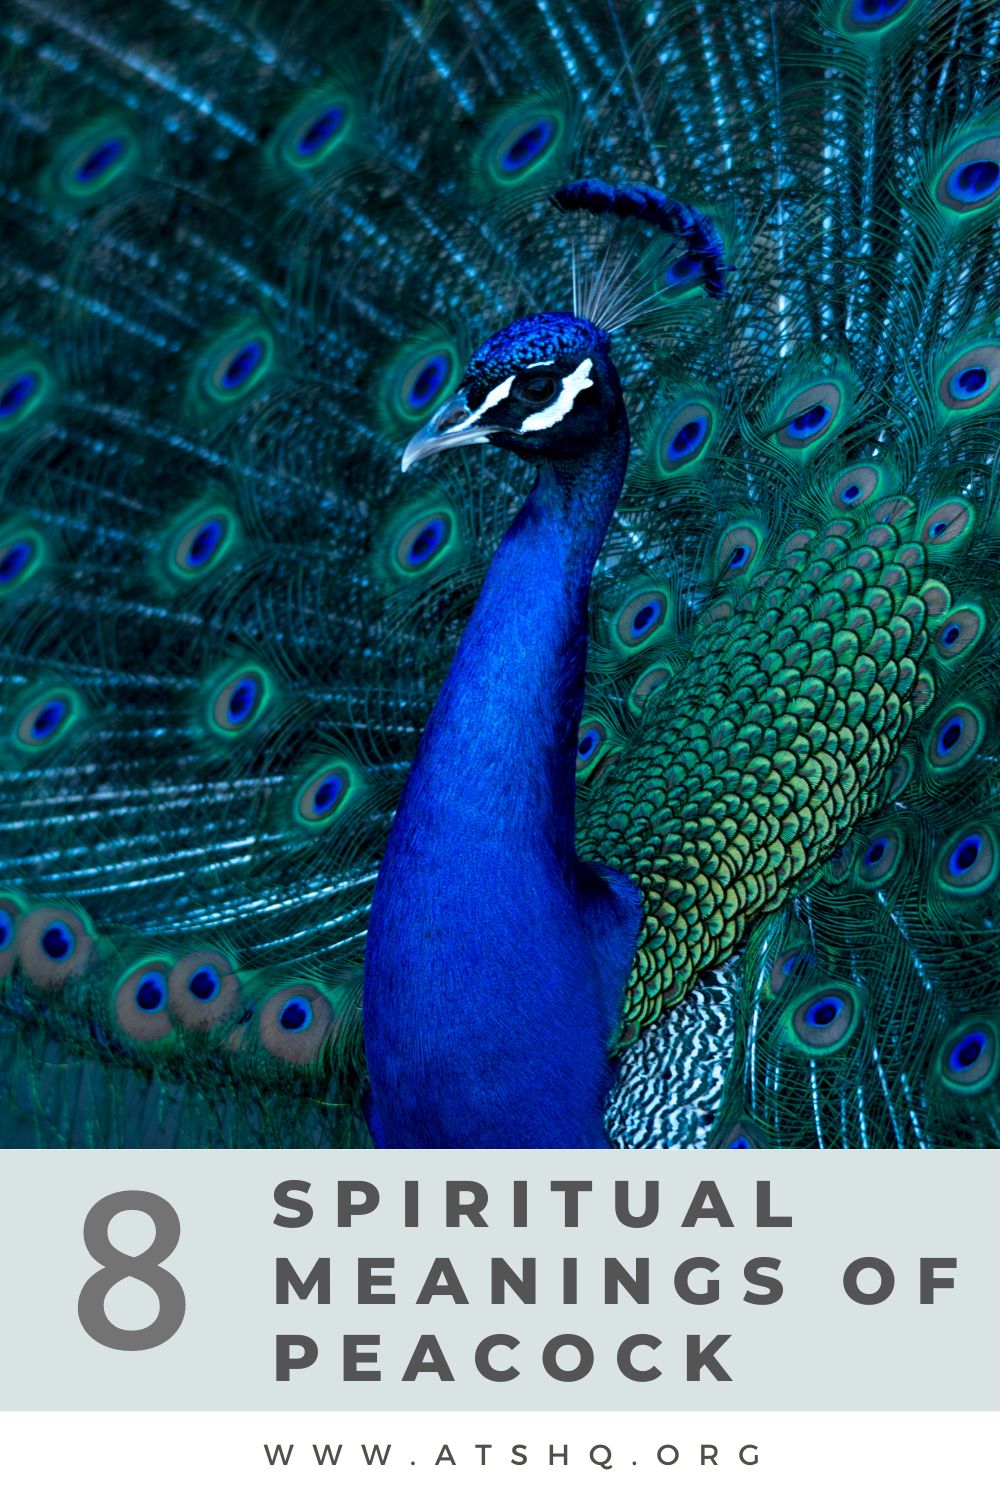 Peacock Symbolism: 8 Spiritual Meanings of Peacock